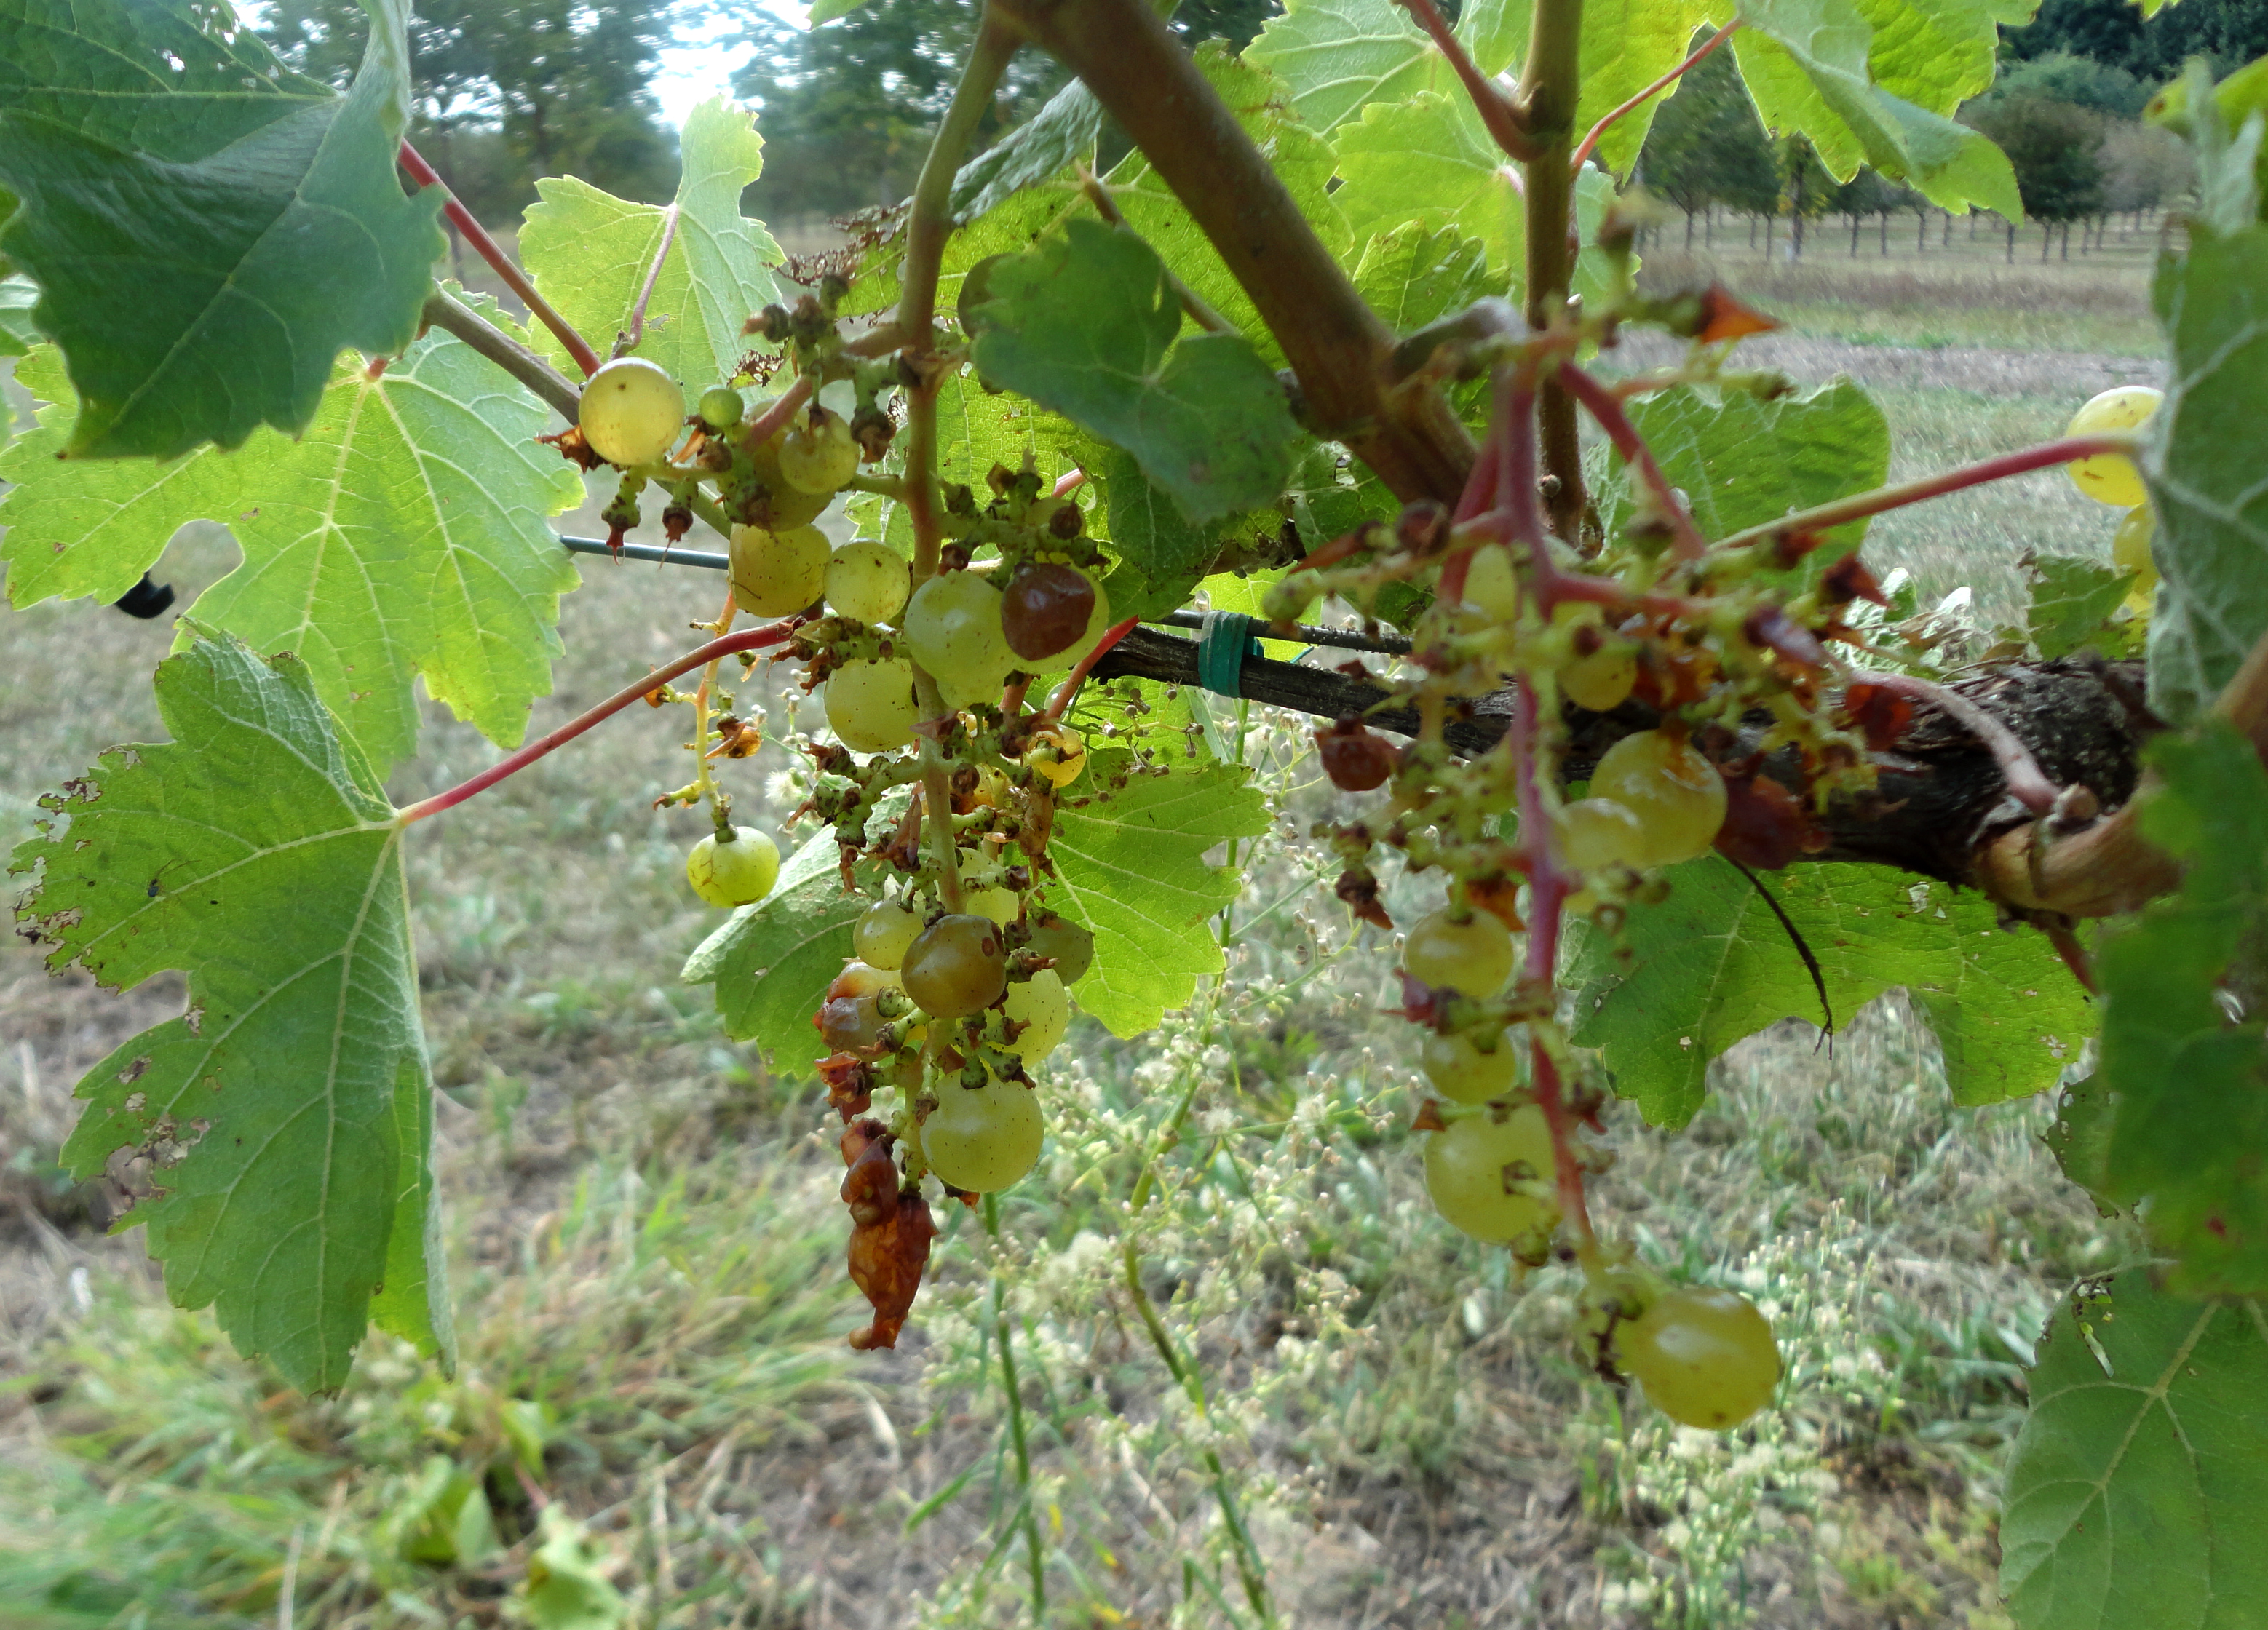 Bird damage to white grape cultivars